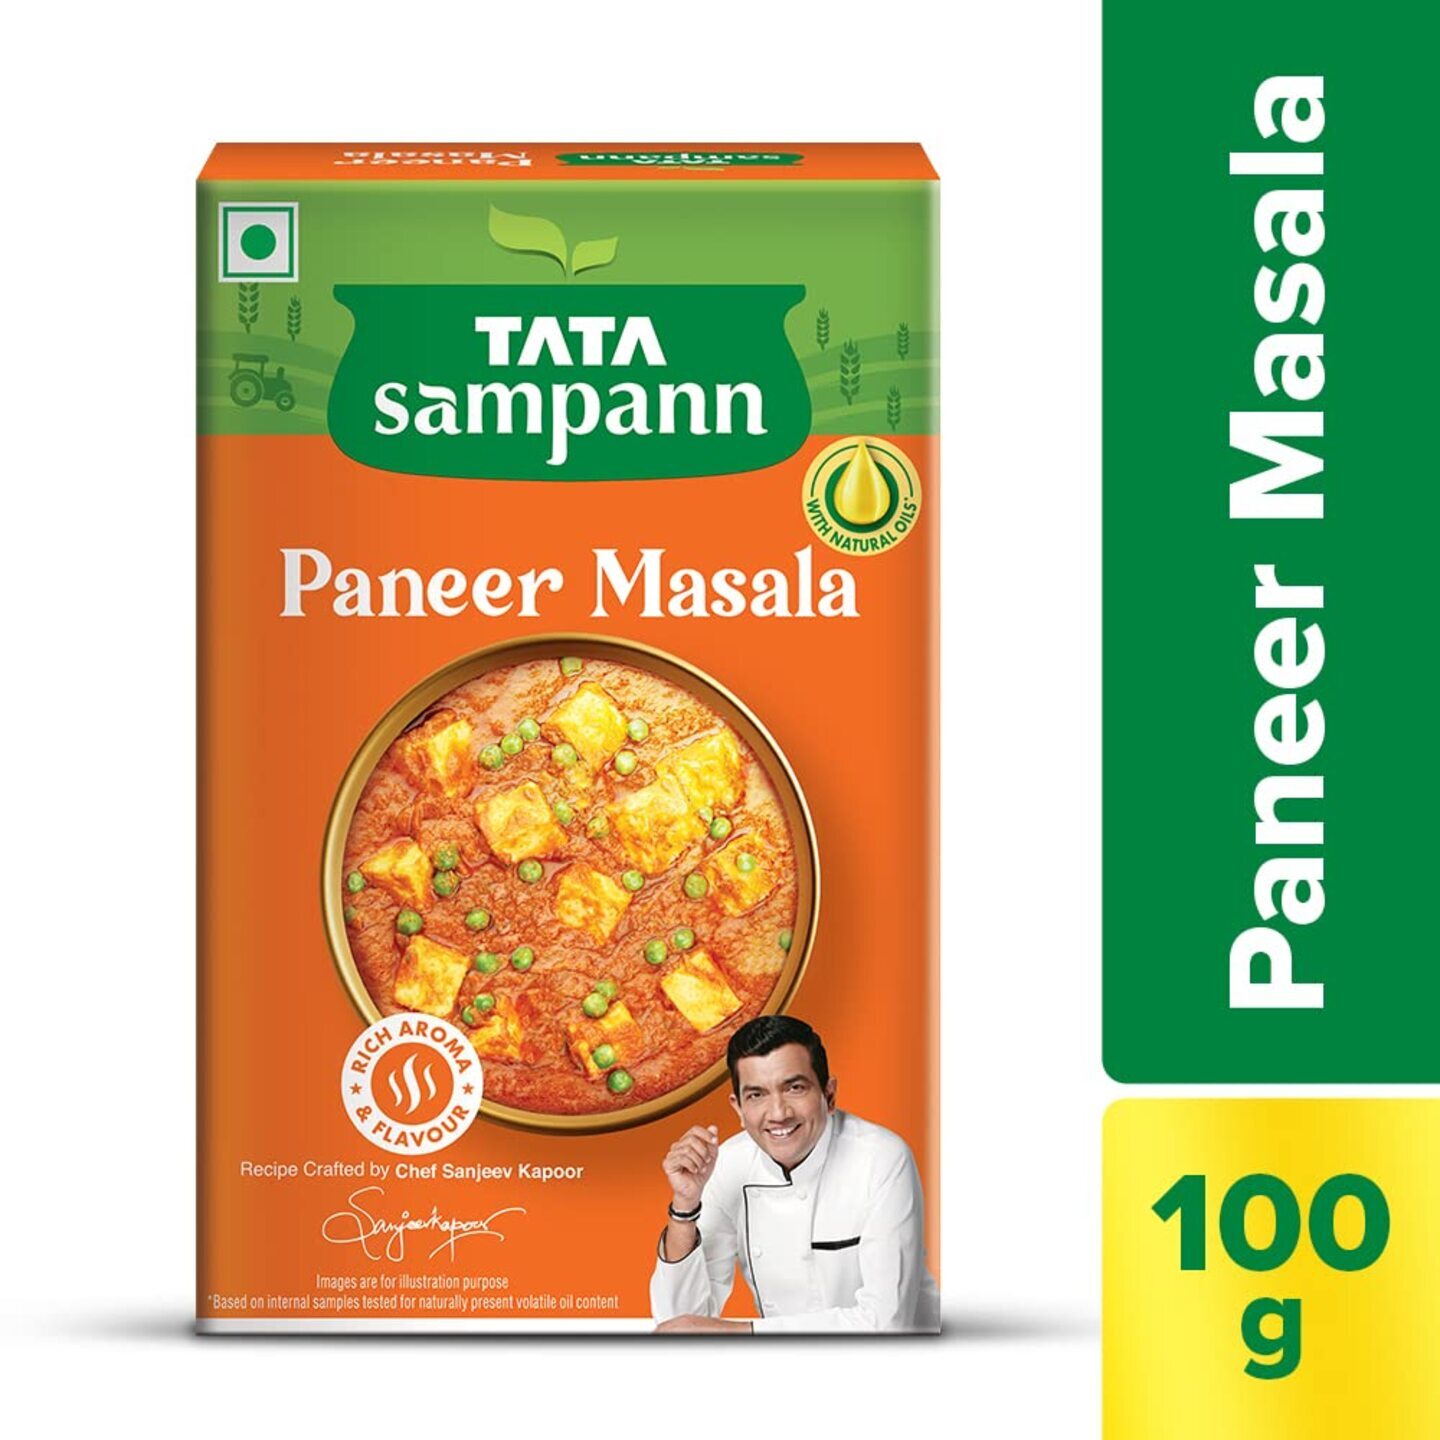 Tata Sampann Paneer Masala with Natural Oils, Crafted by Chef Sanjeev Kapoor, 100g